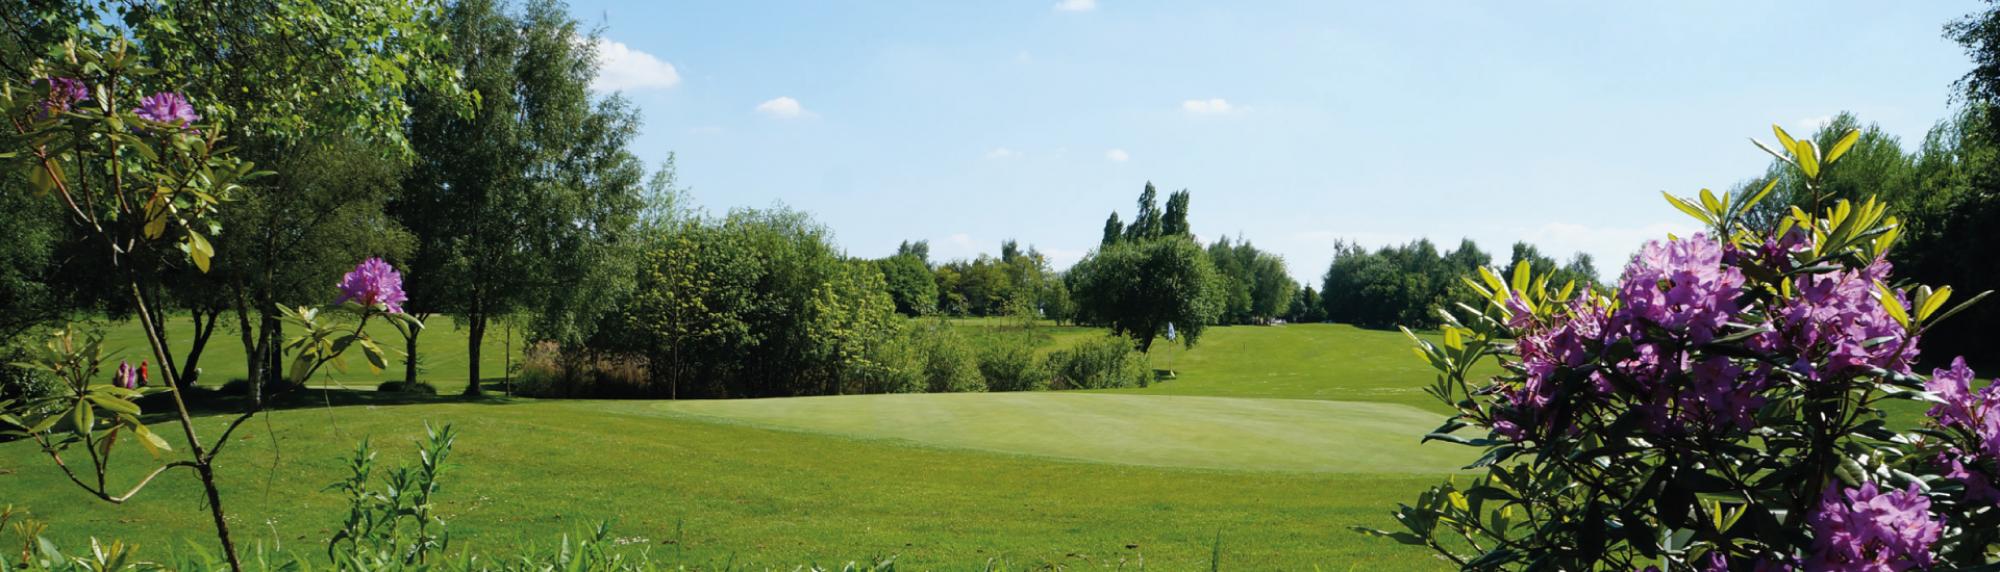 Rouen Foret Verte Golf Club has got among the best golf course near Normandy